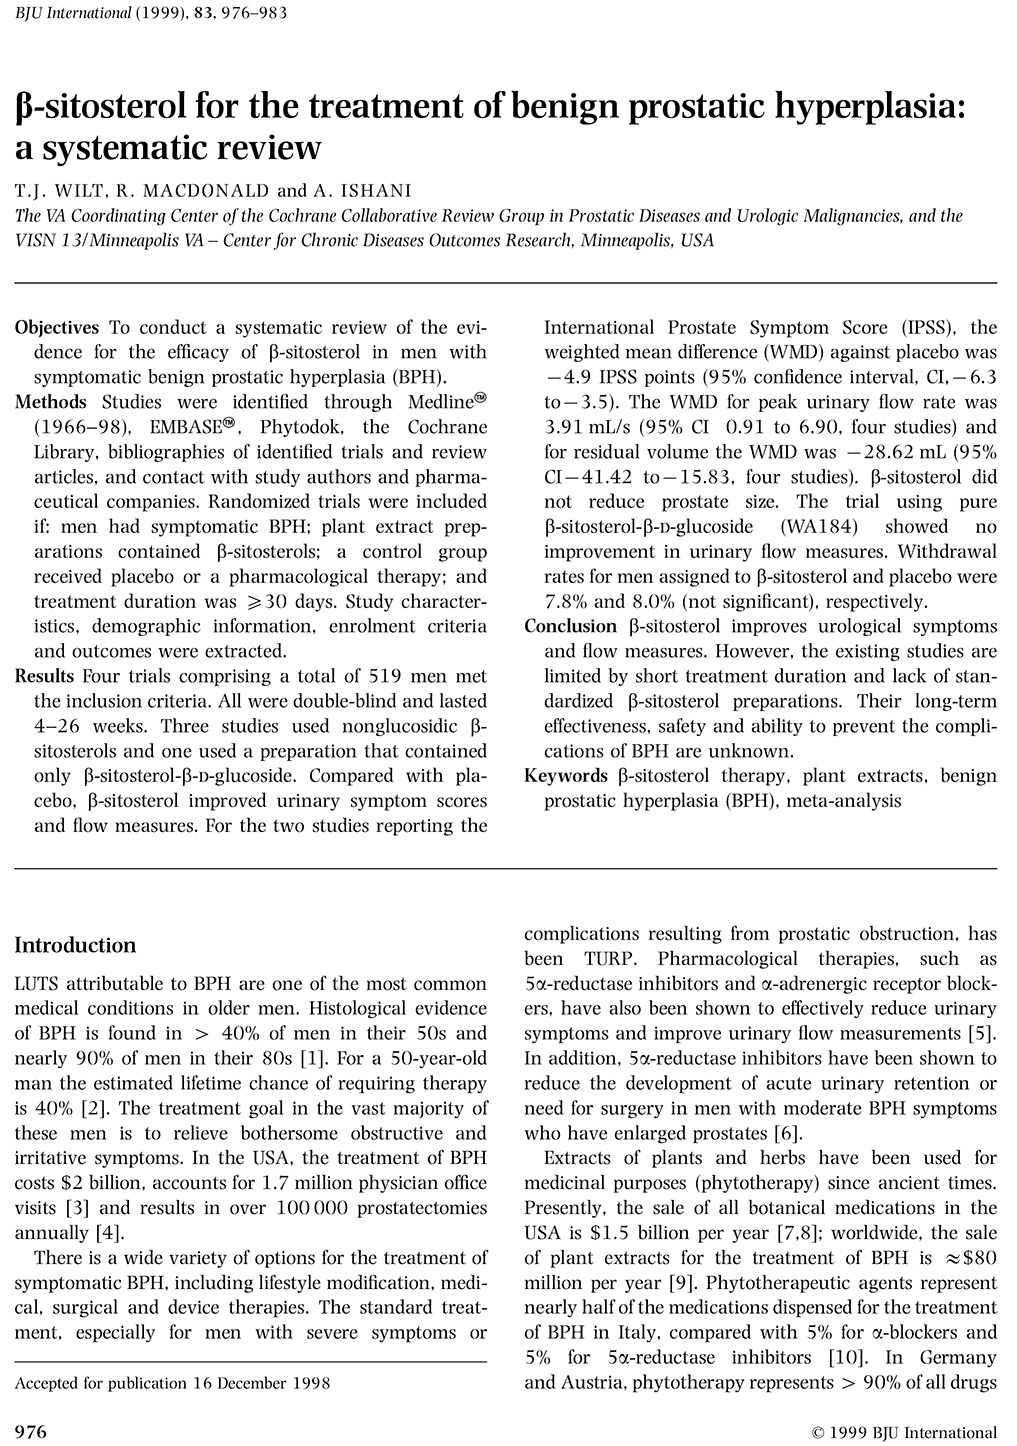 Beta-Sitosterol - Prostate Review PDF